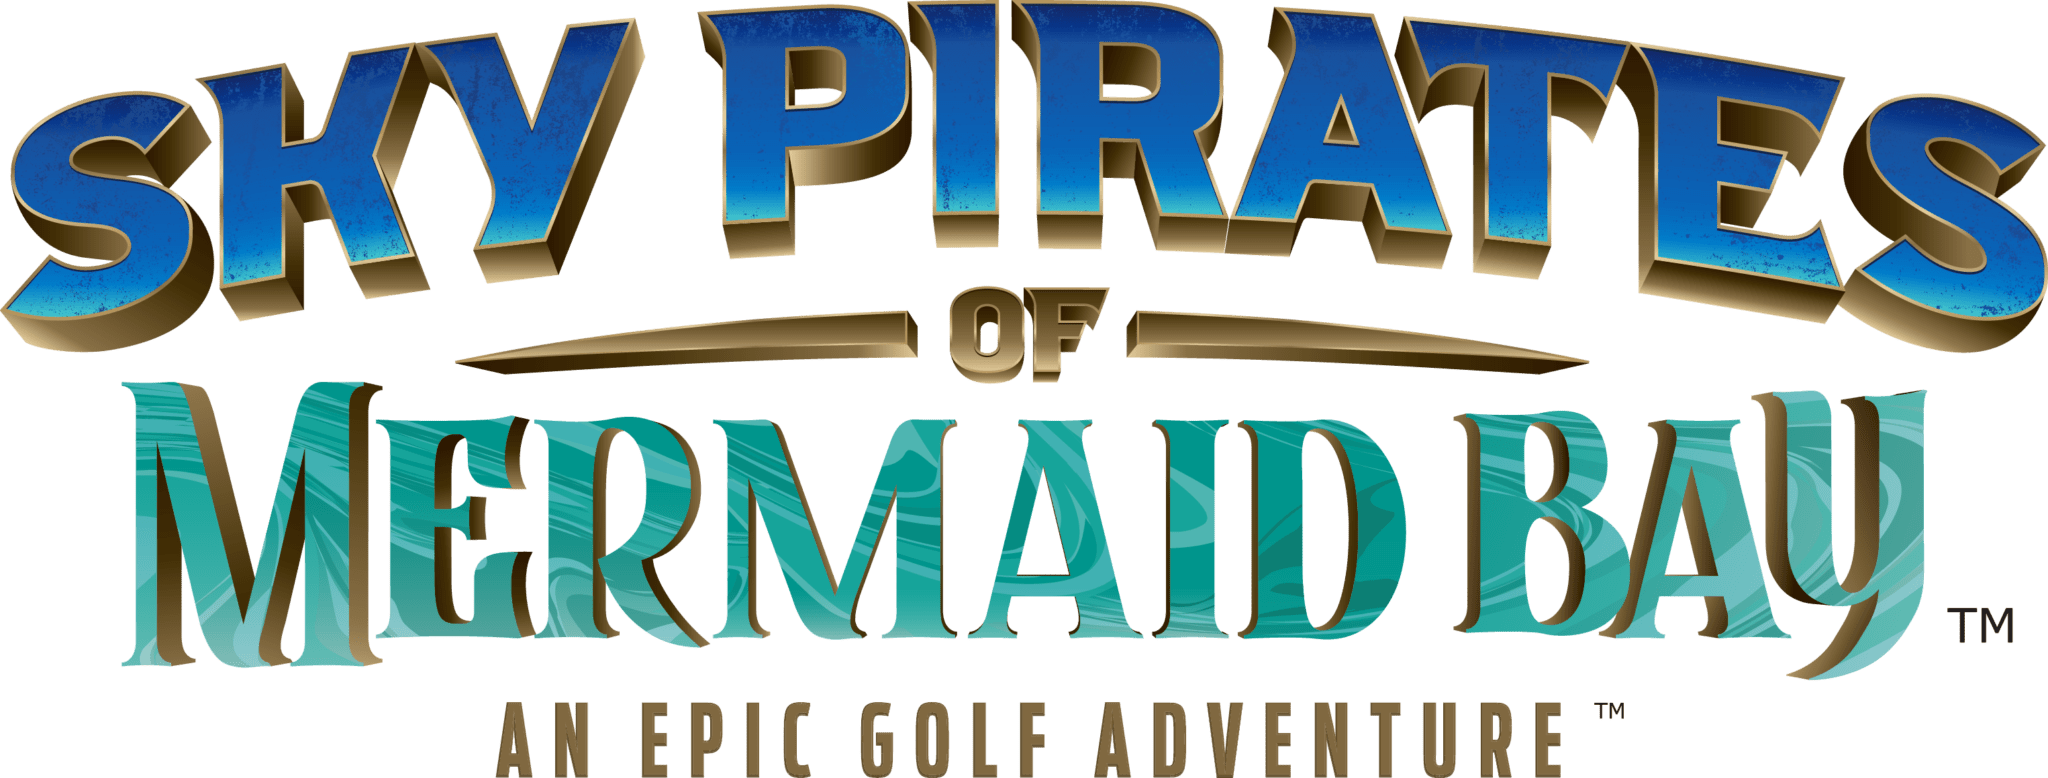 >Field Trips » Sky Pirates of Mermaid Bay Mini Golf | Pigeon Forge, TN Logo